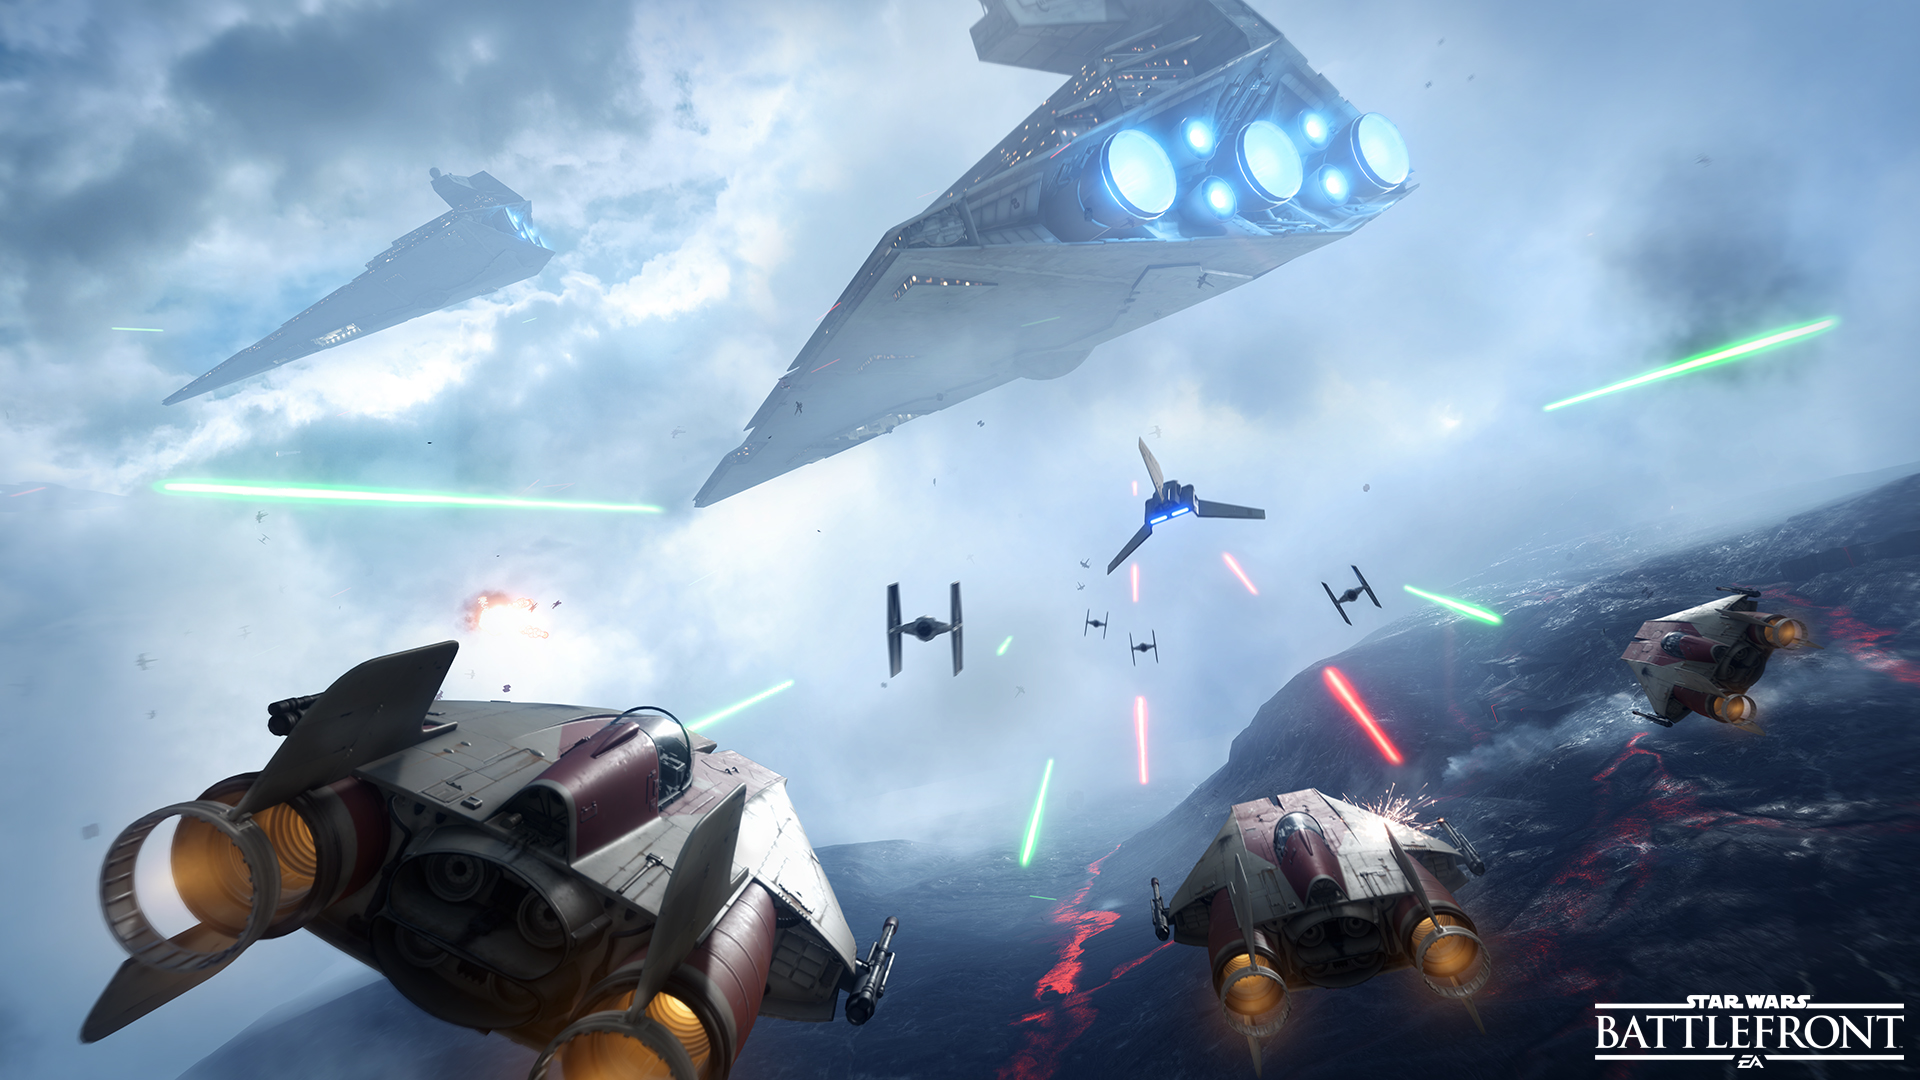 EA Confirms “Star Wars Battlefront” Sequel for 2017